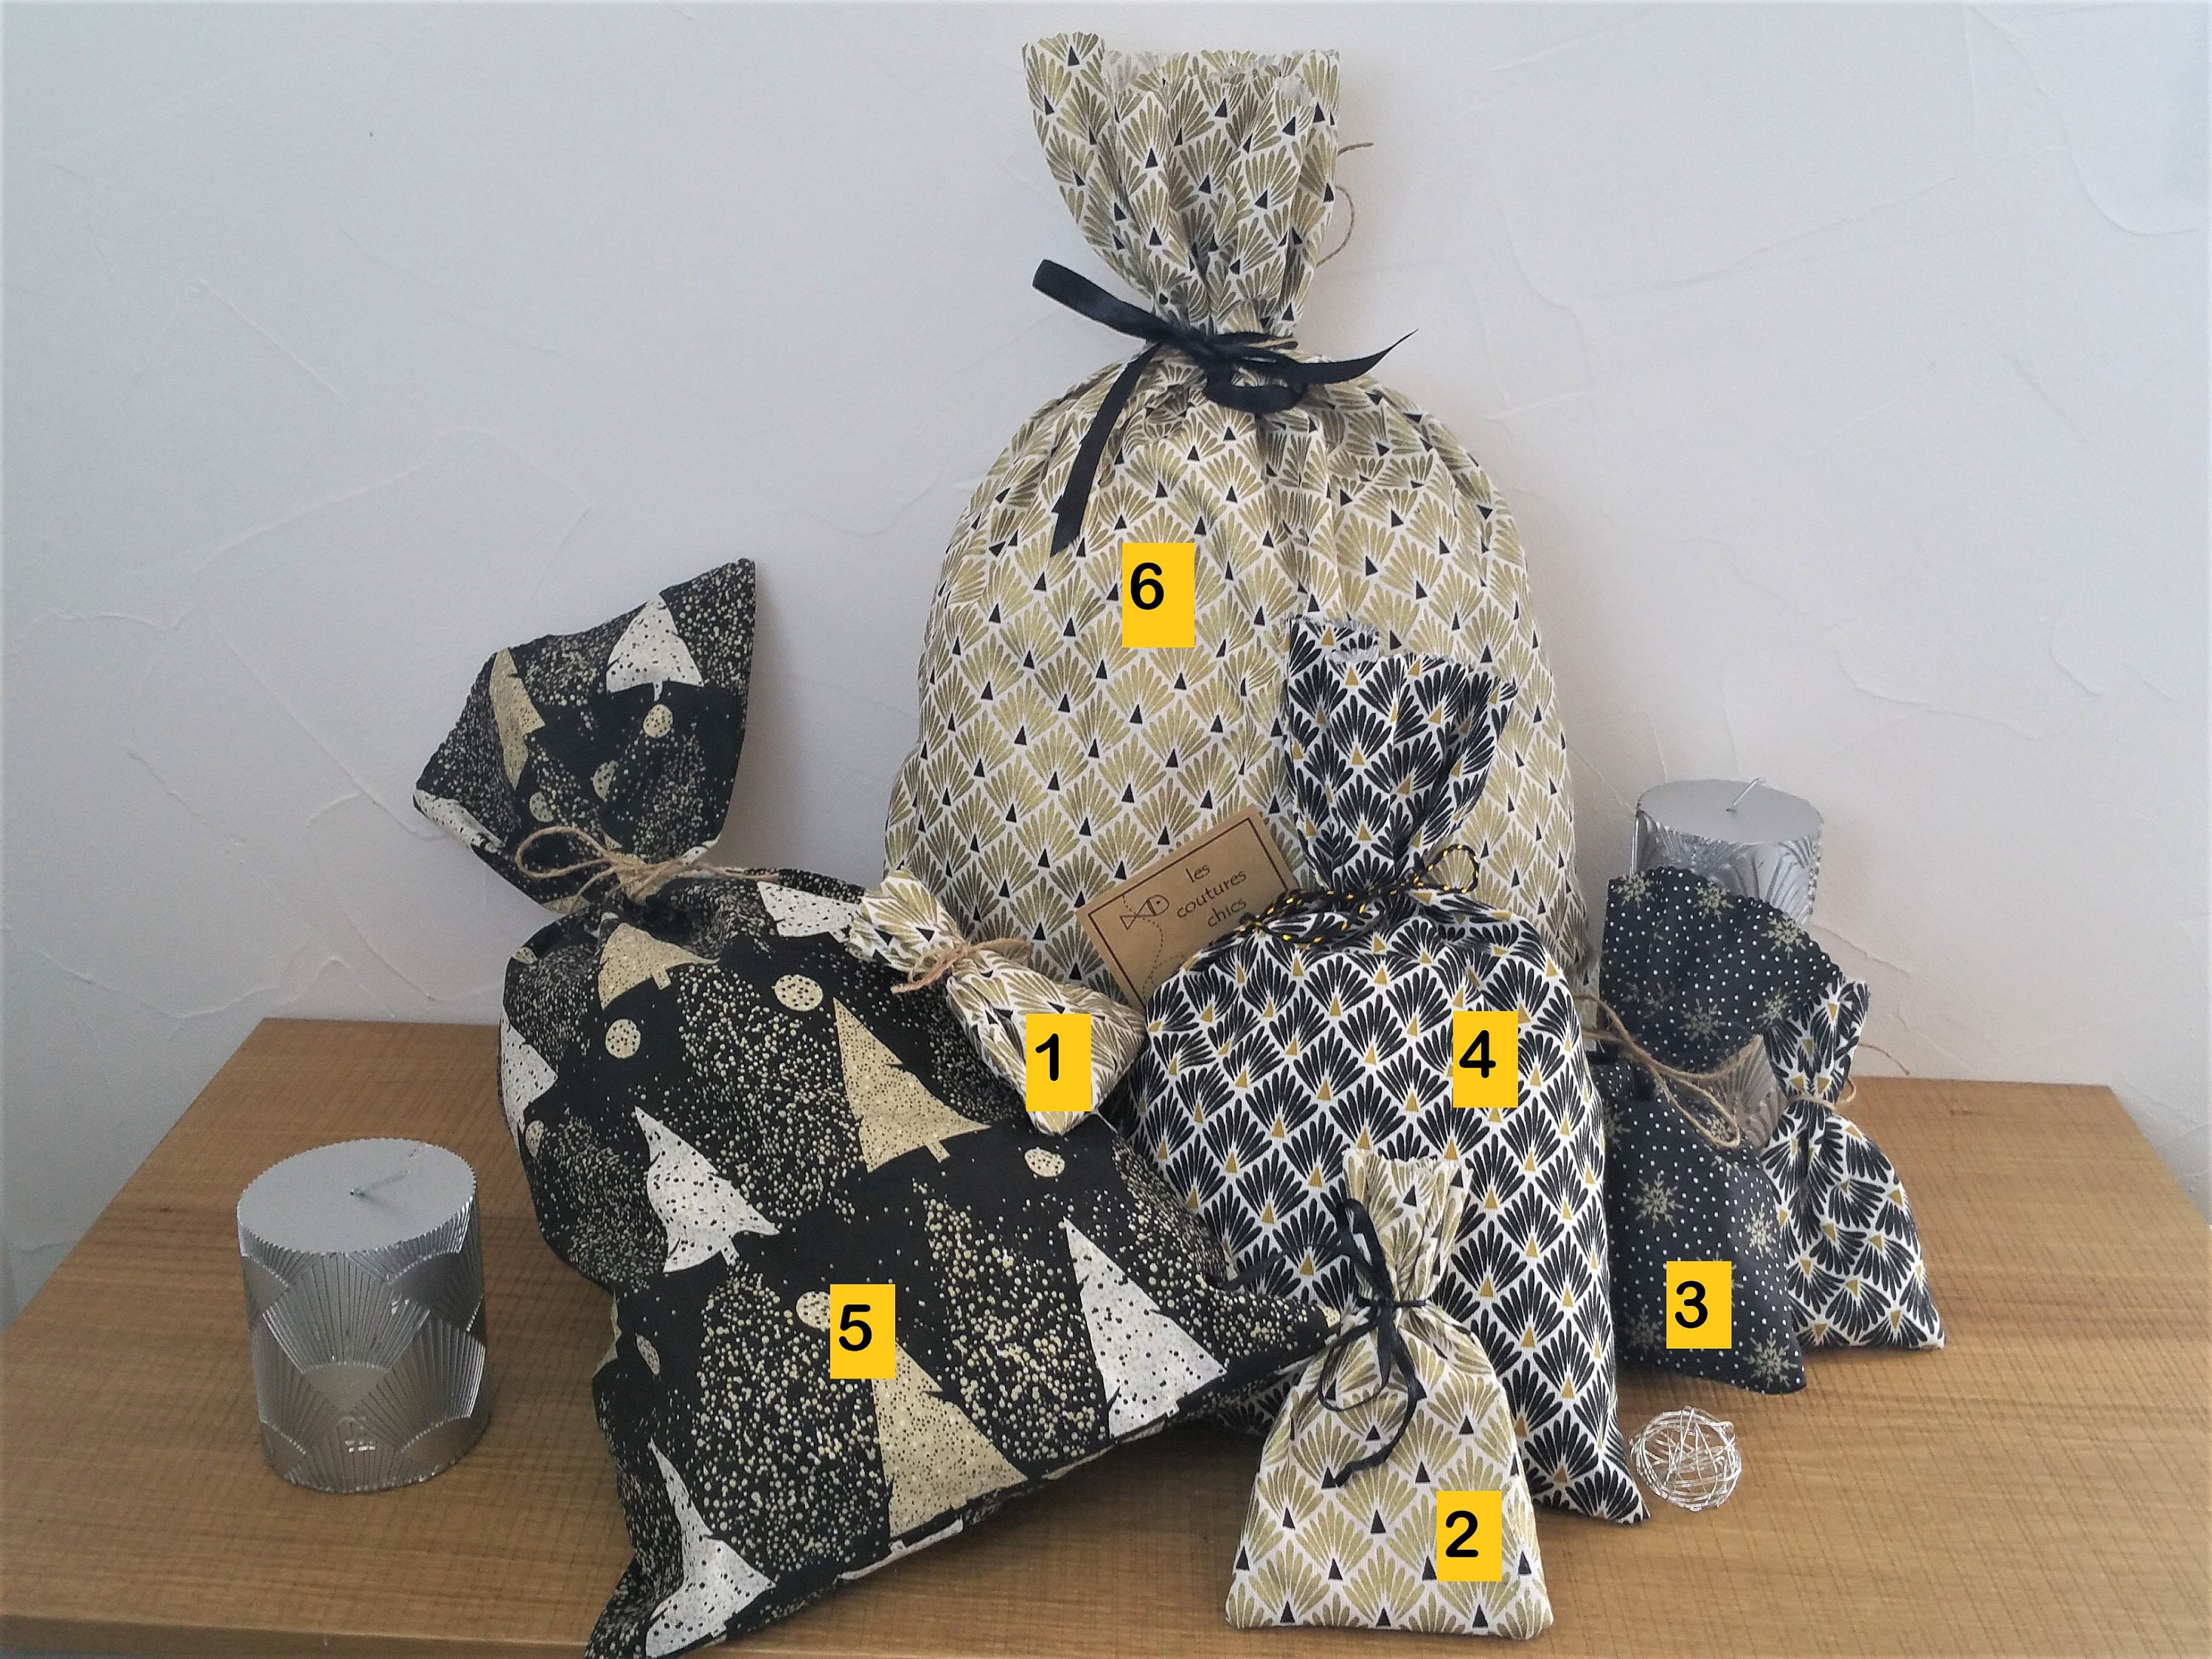 Furoshiki ou emballage cadeau réutilisable - Noël - Fil'Otablo